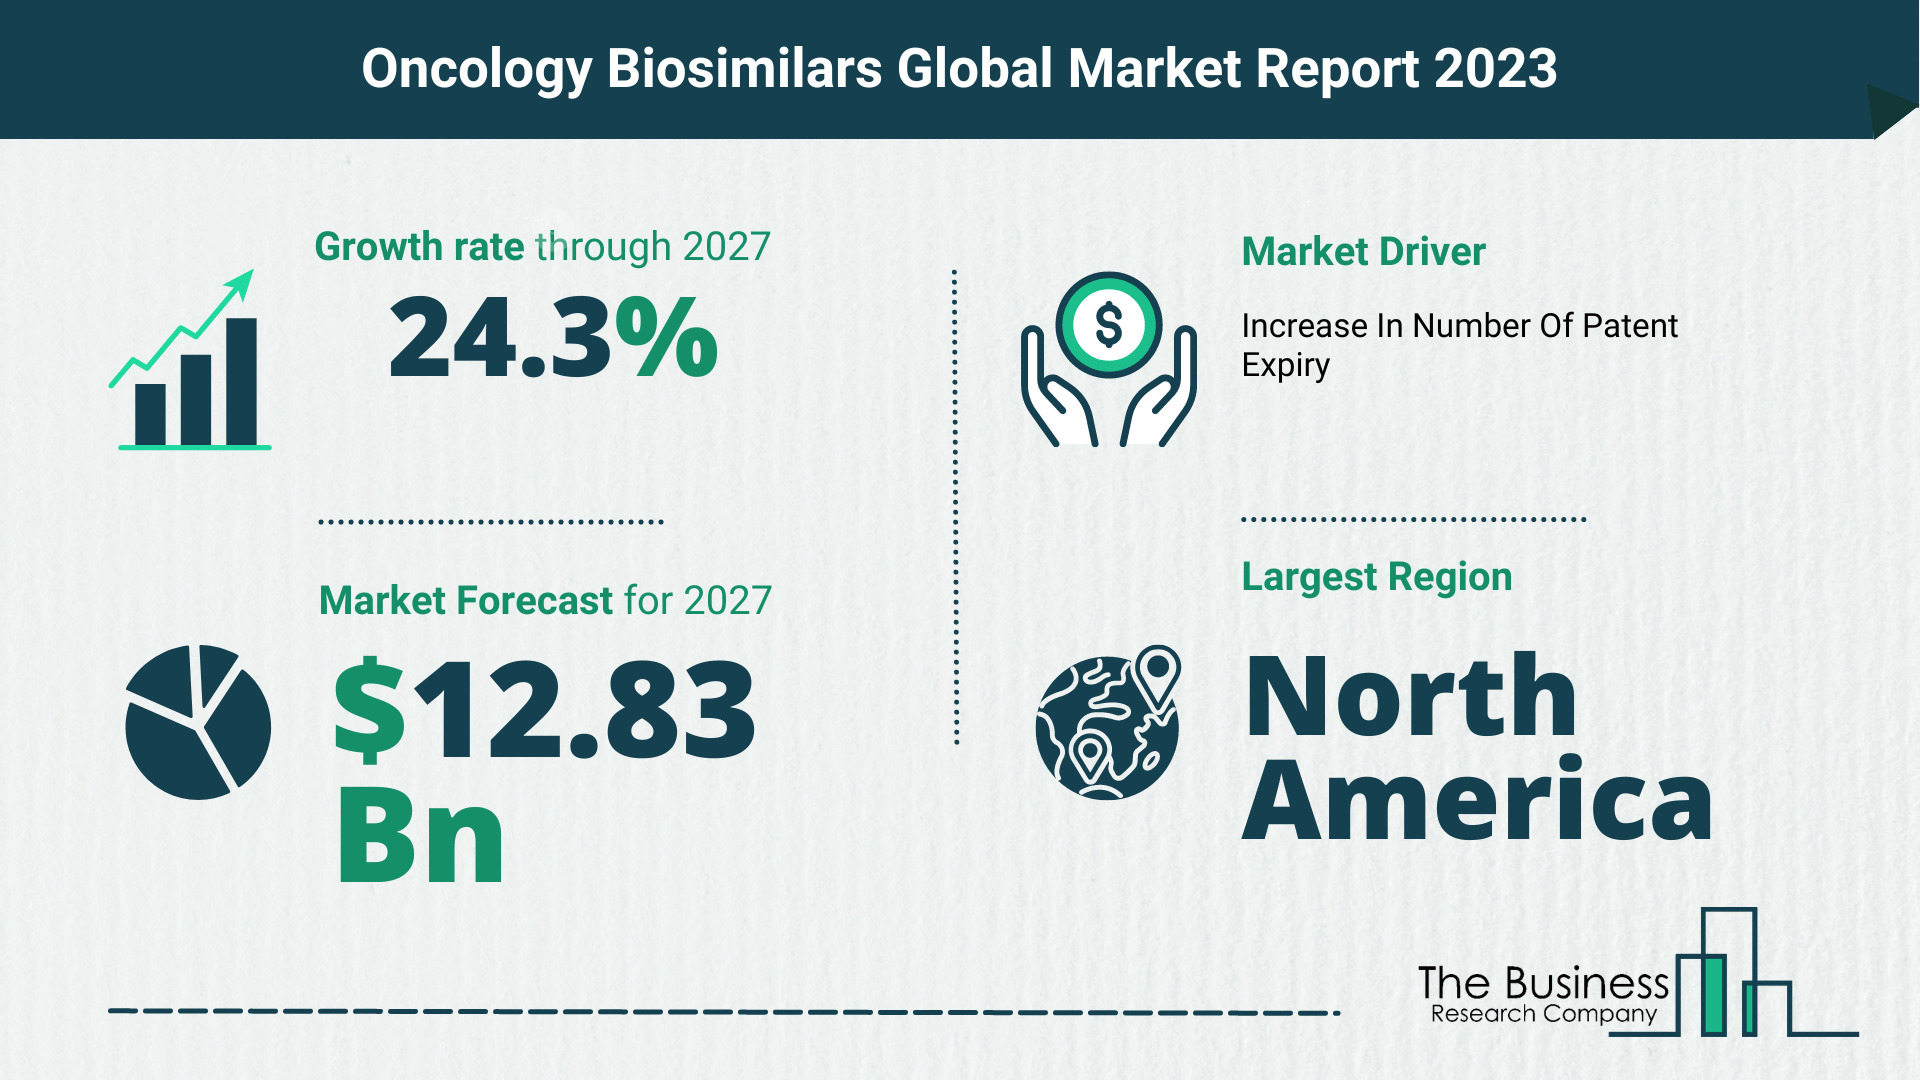 Global Oncology Biosimilars Market